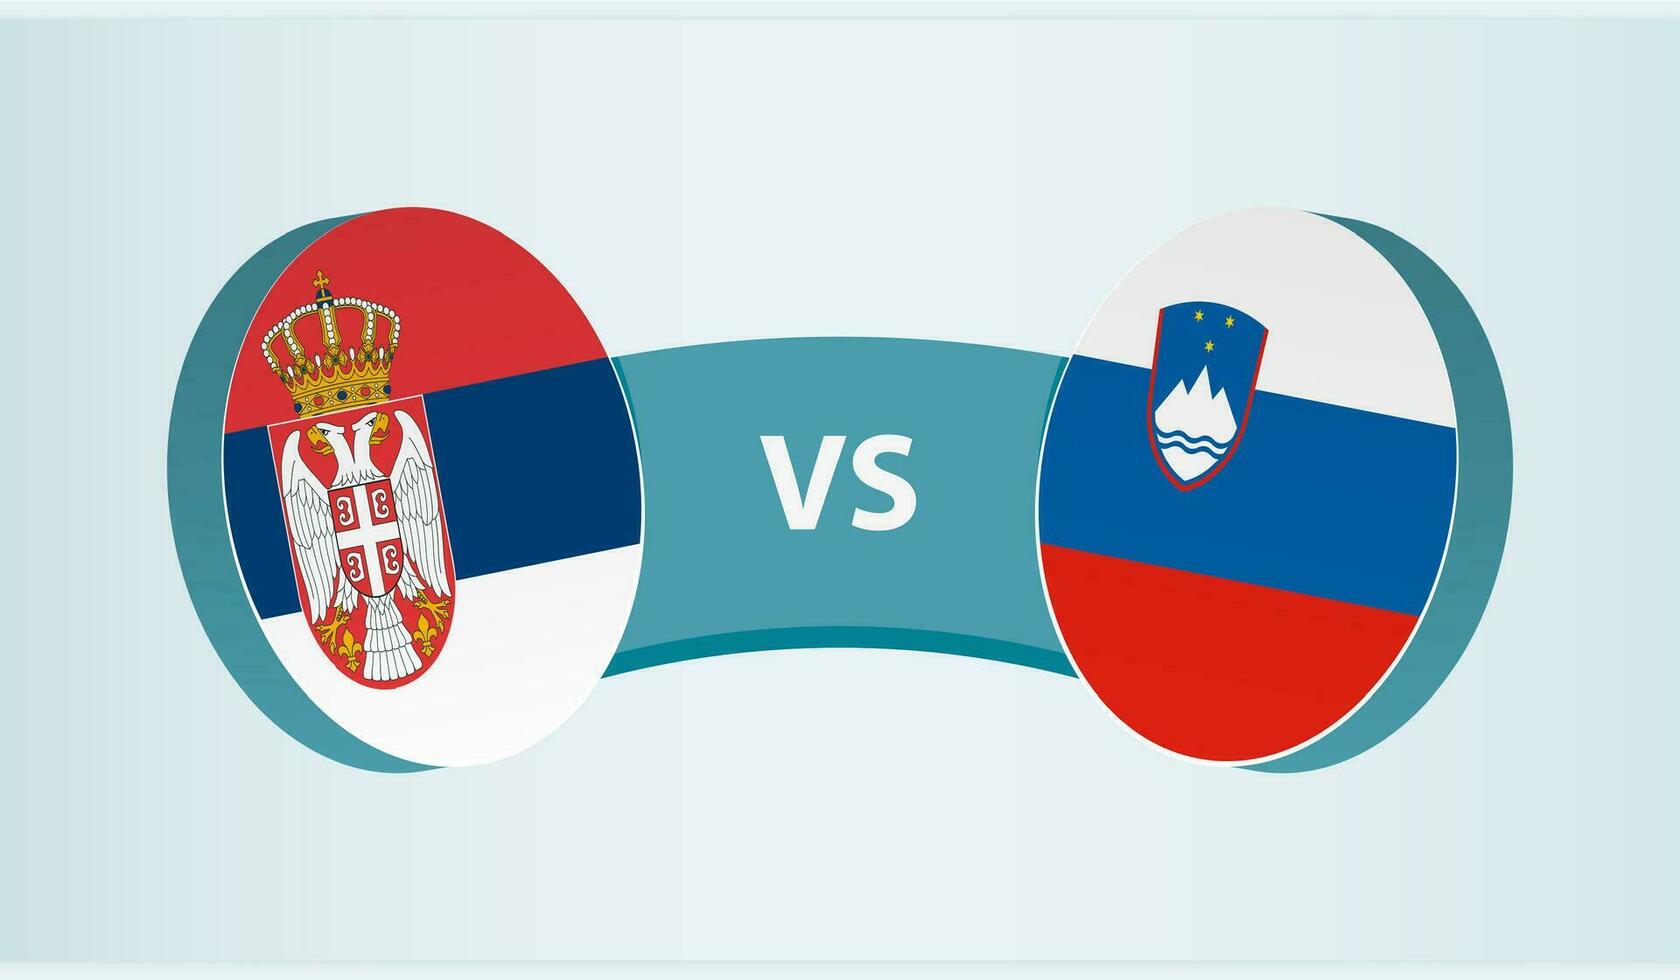 Serbia versus Slovenia, team sports competition concept. vector